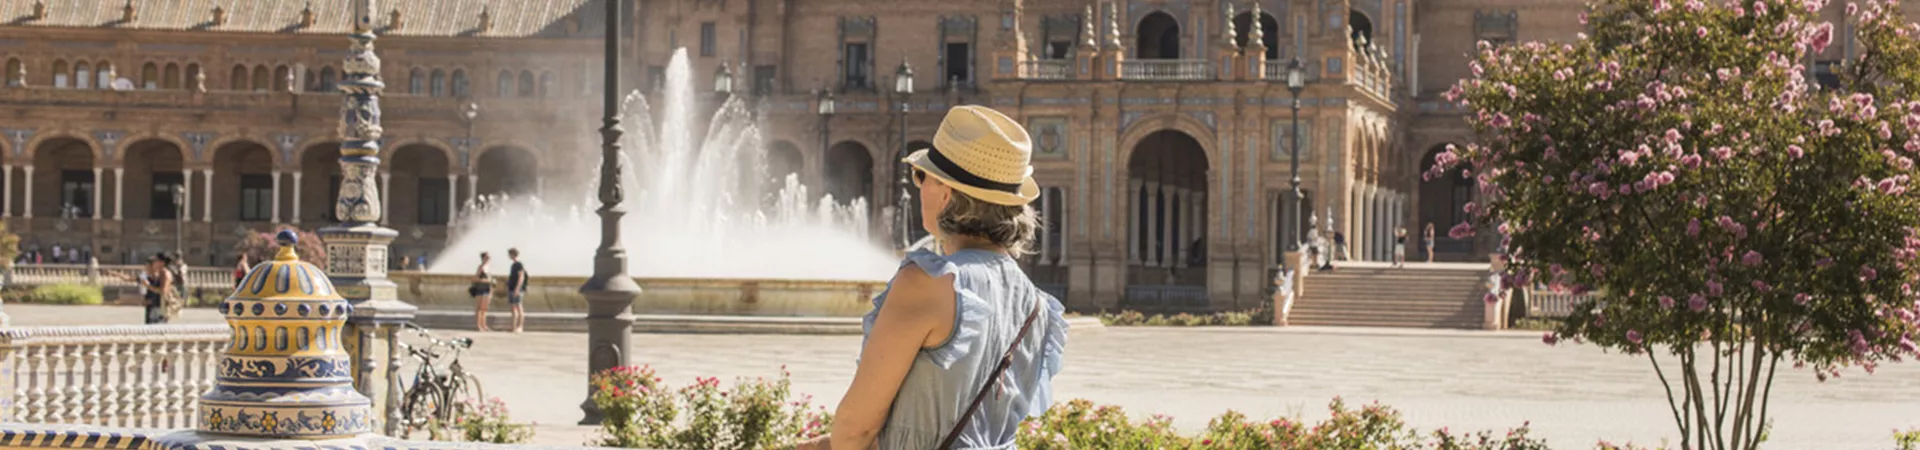 A traveller visiting Plaza de Espana in Seville, Spain